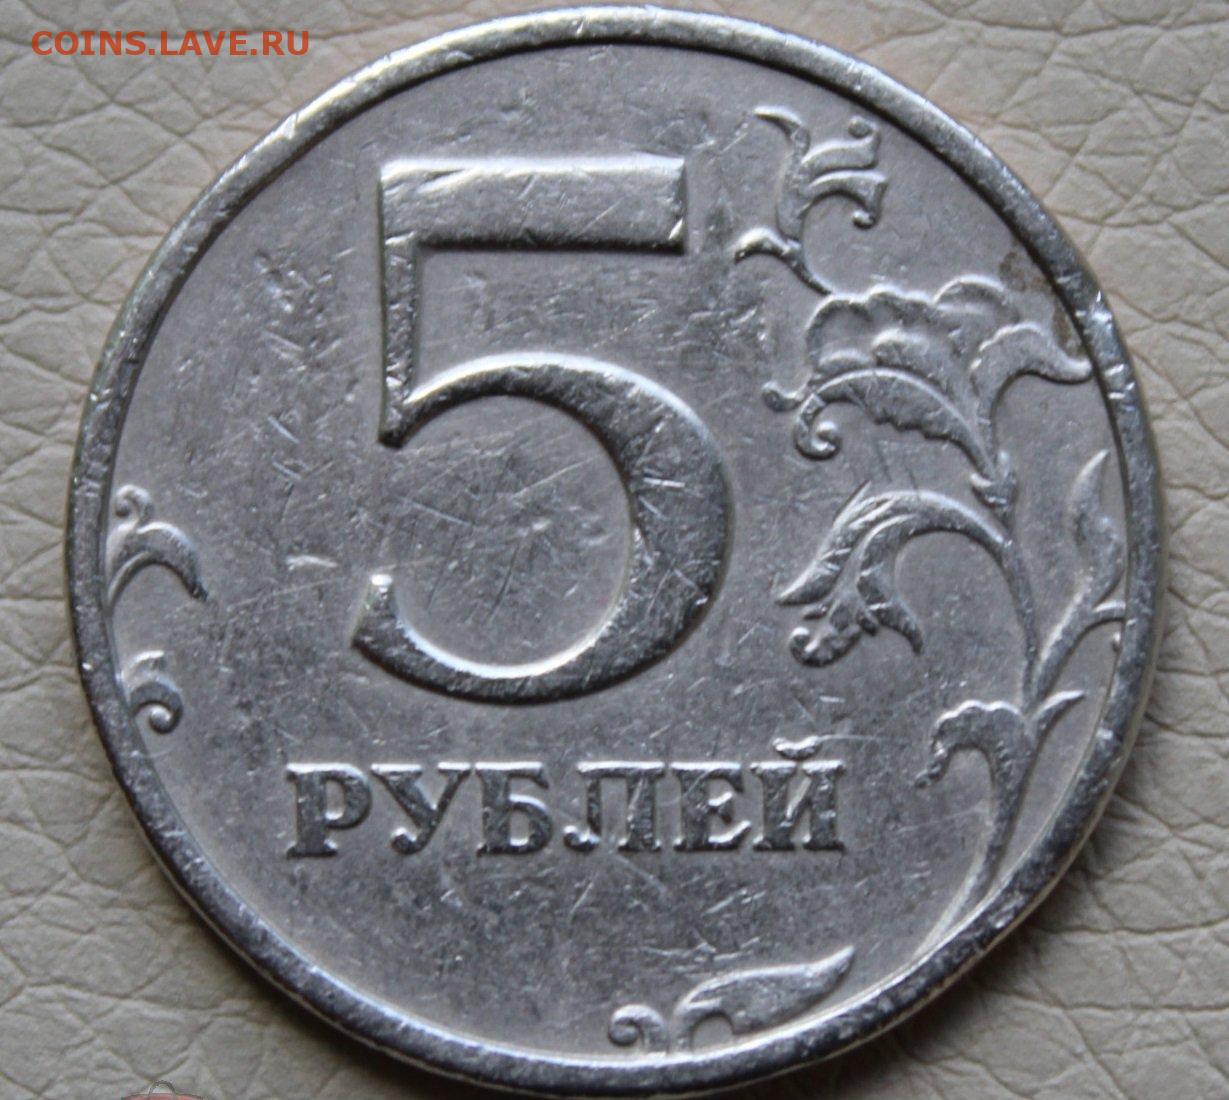 1999 год 5 рублей монеты. Монета 5 рублей 1999. 5 Рублей 1999 СПМД. 5 Рублей 2000 СПМД. 5 Рублевая монета 1999 года.